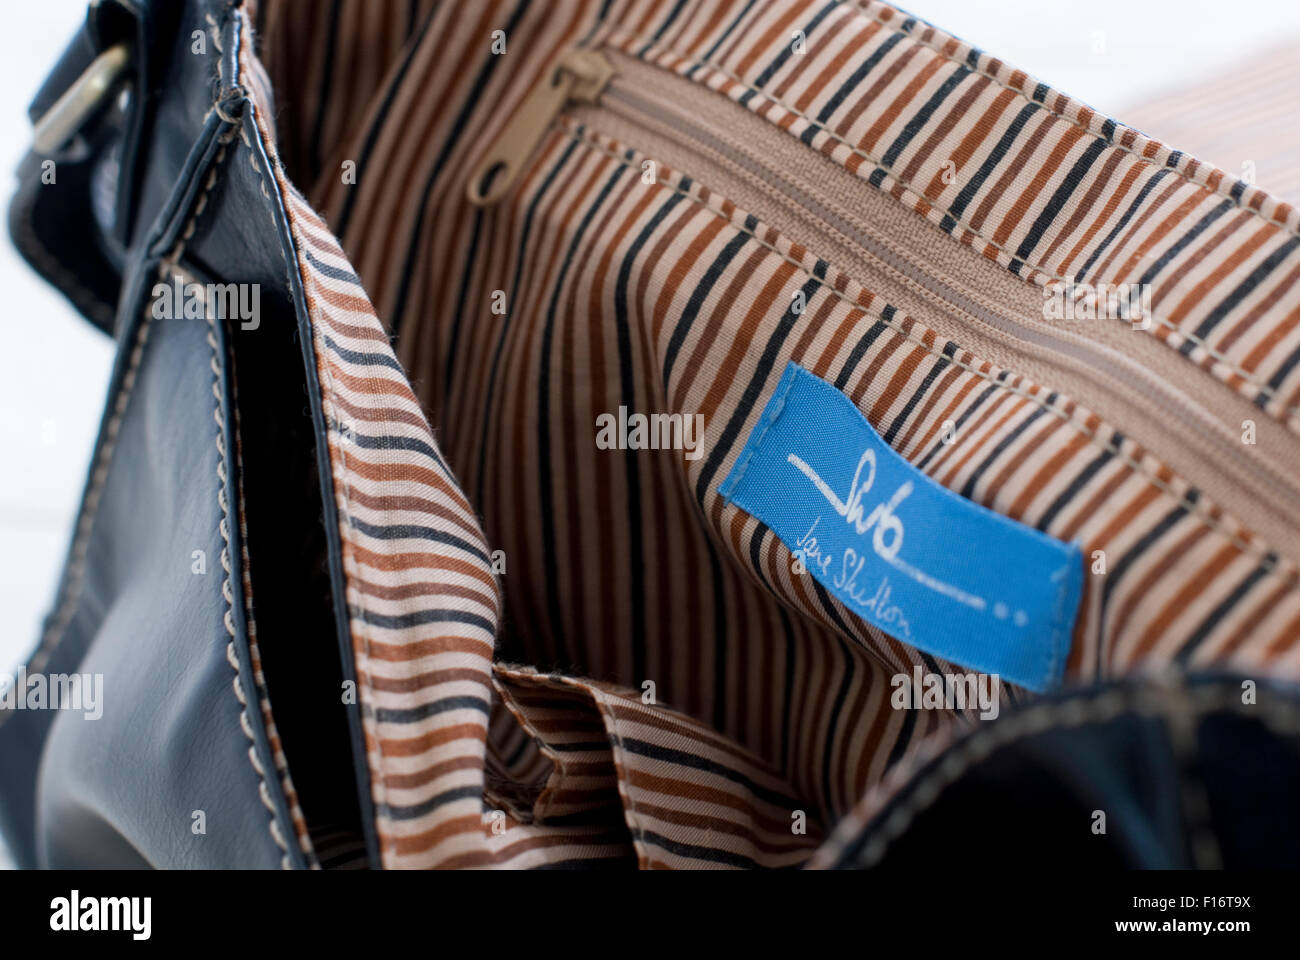 Editorial image showing the label inside a Jane Shilton Handbag Stock Photo  - Alamy